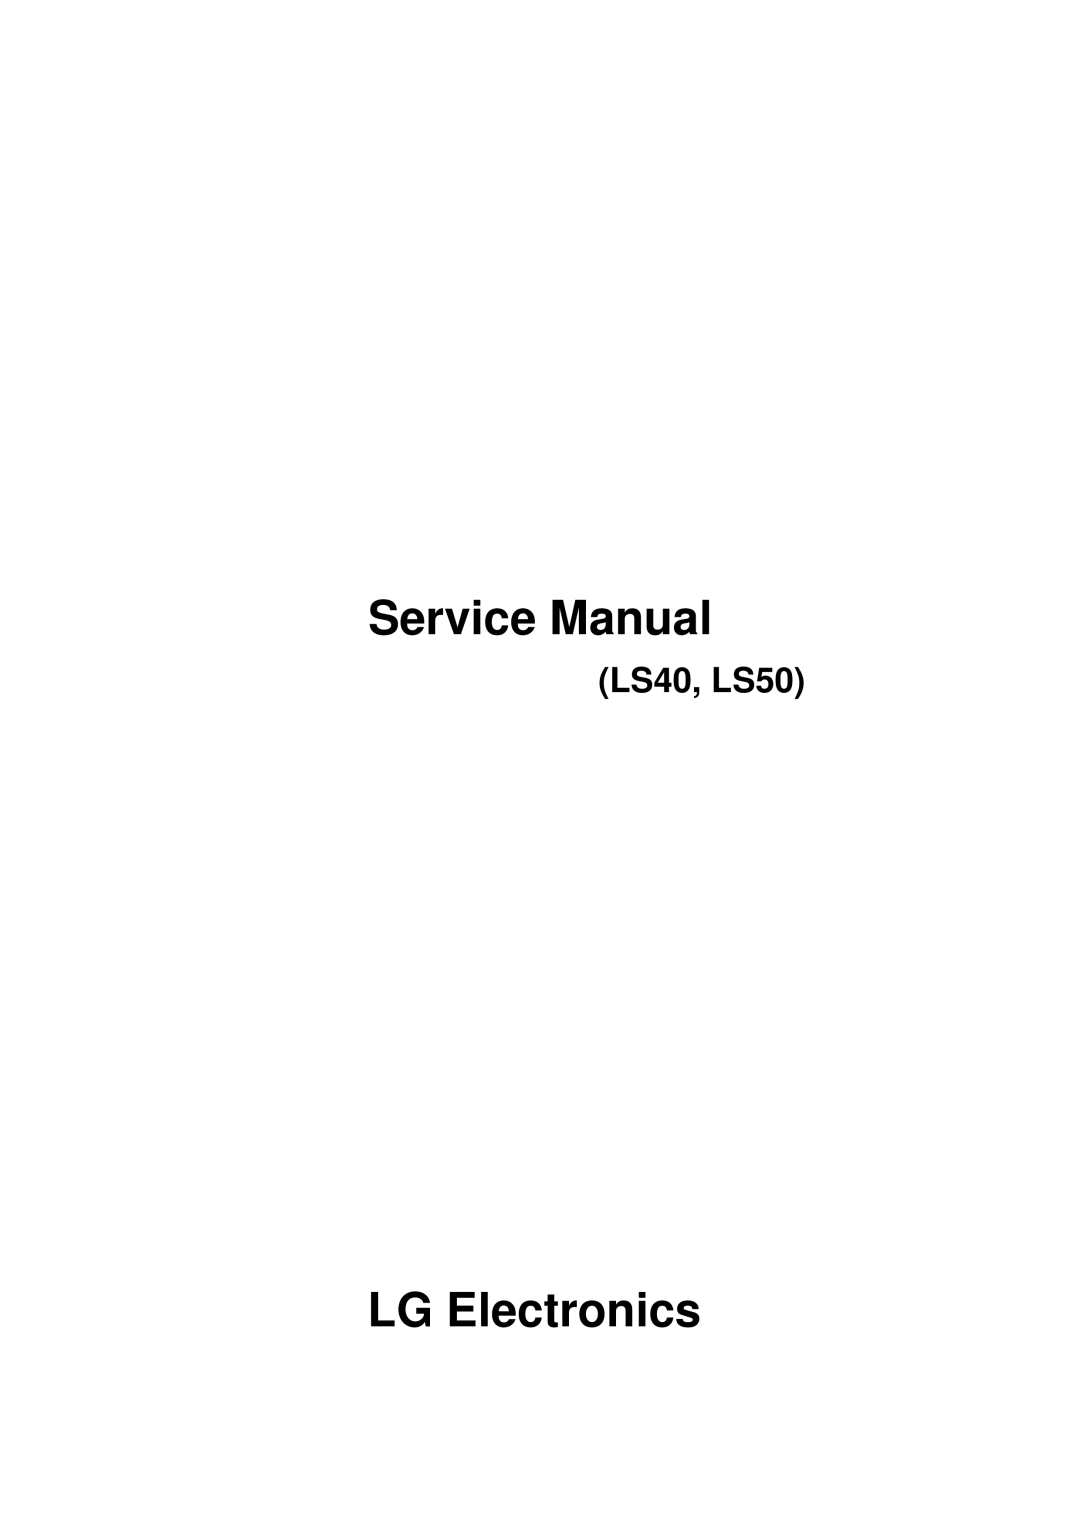 LG Electronics service manual Service Manual, LG Electronics, LS40, LS50 